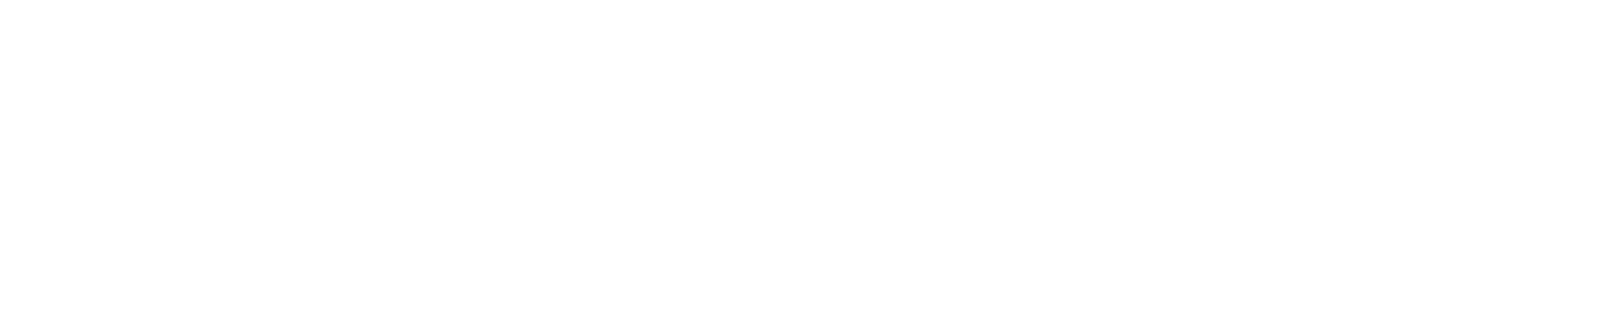 Franklin County Visitors Bureau